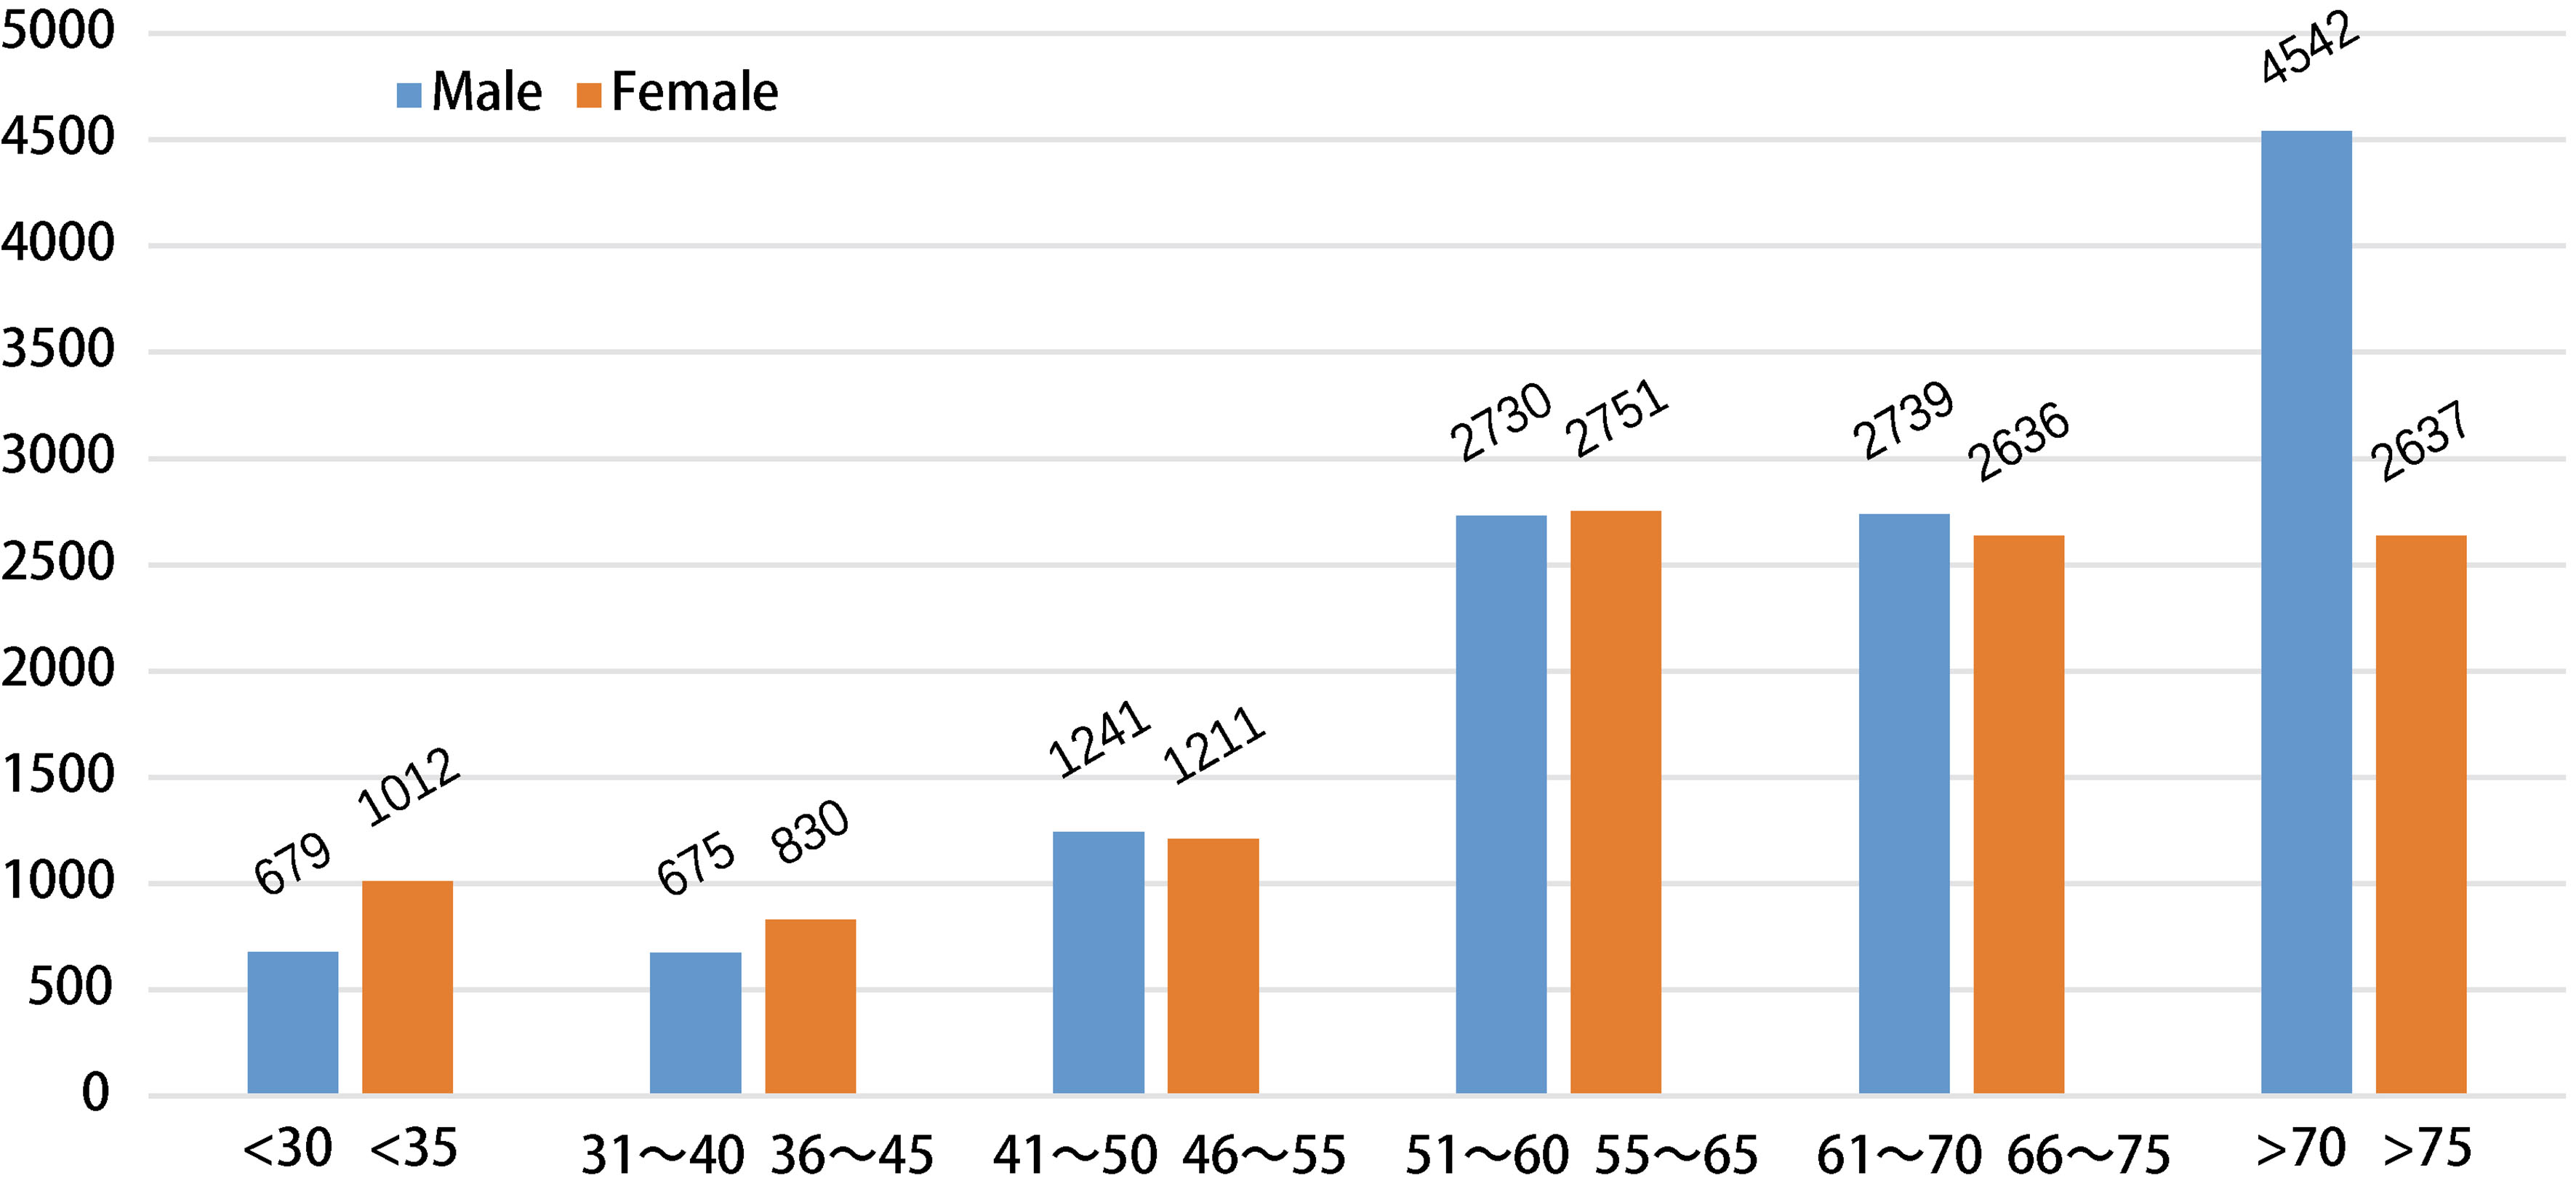 Age-sex distribution.